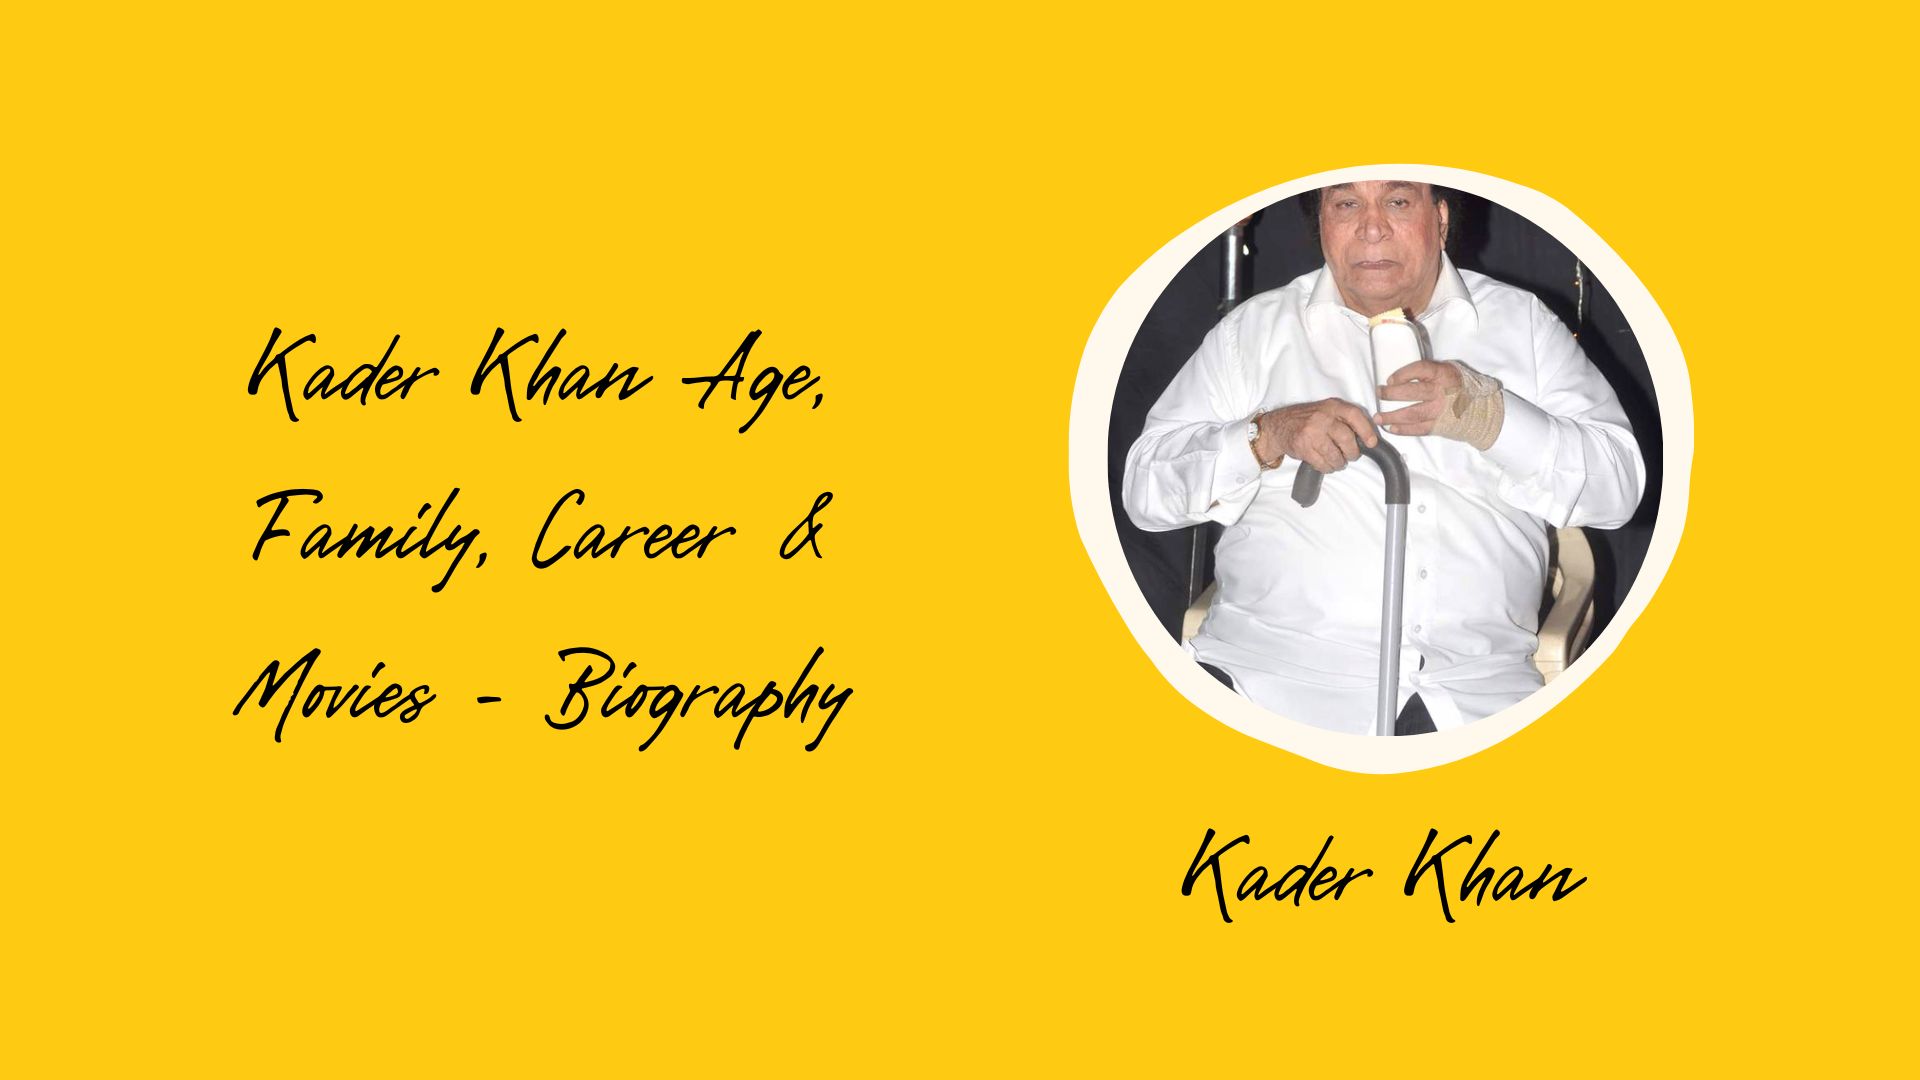 Kader Khan Age, Family, Career & Movies - Biography